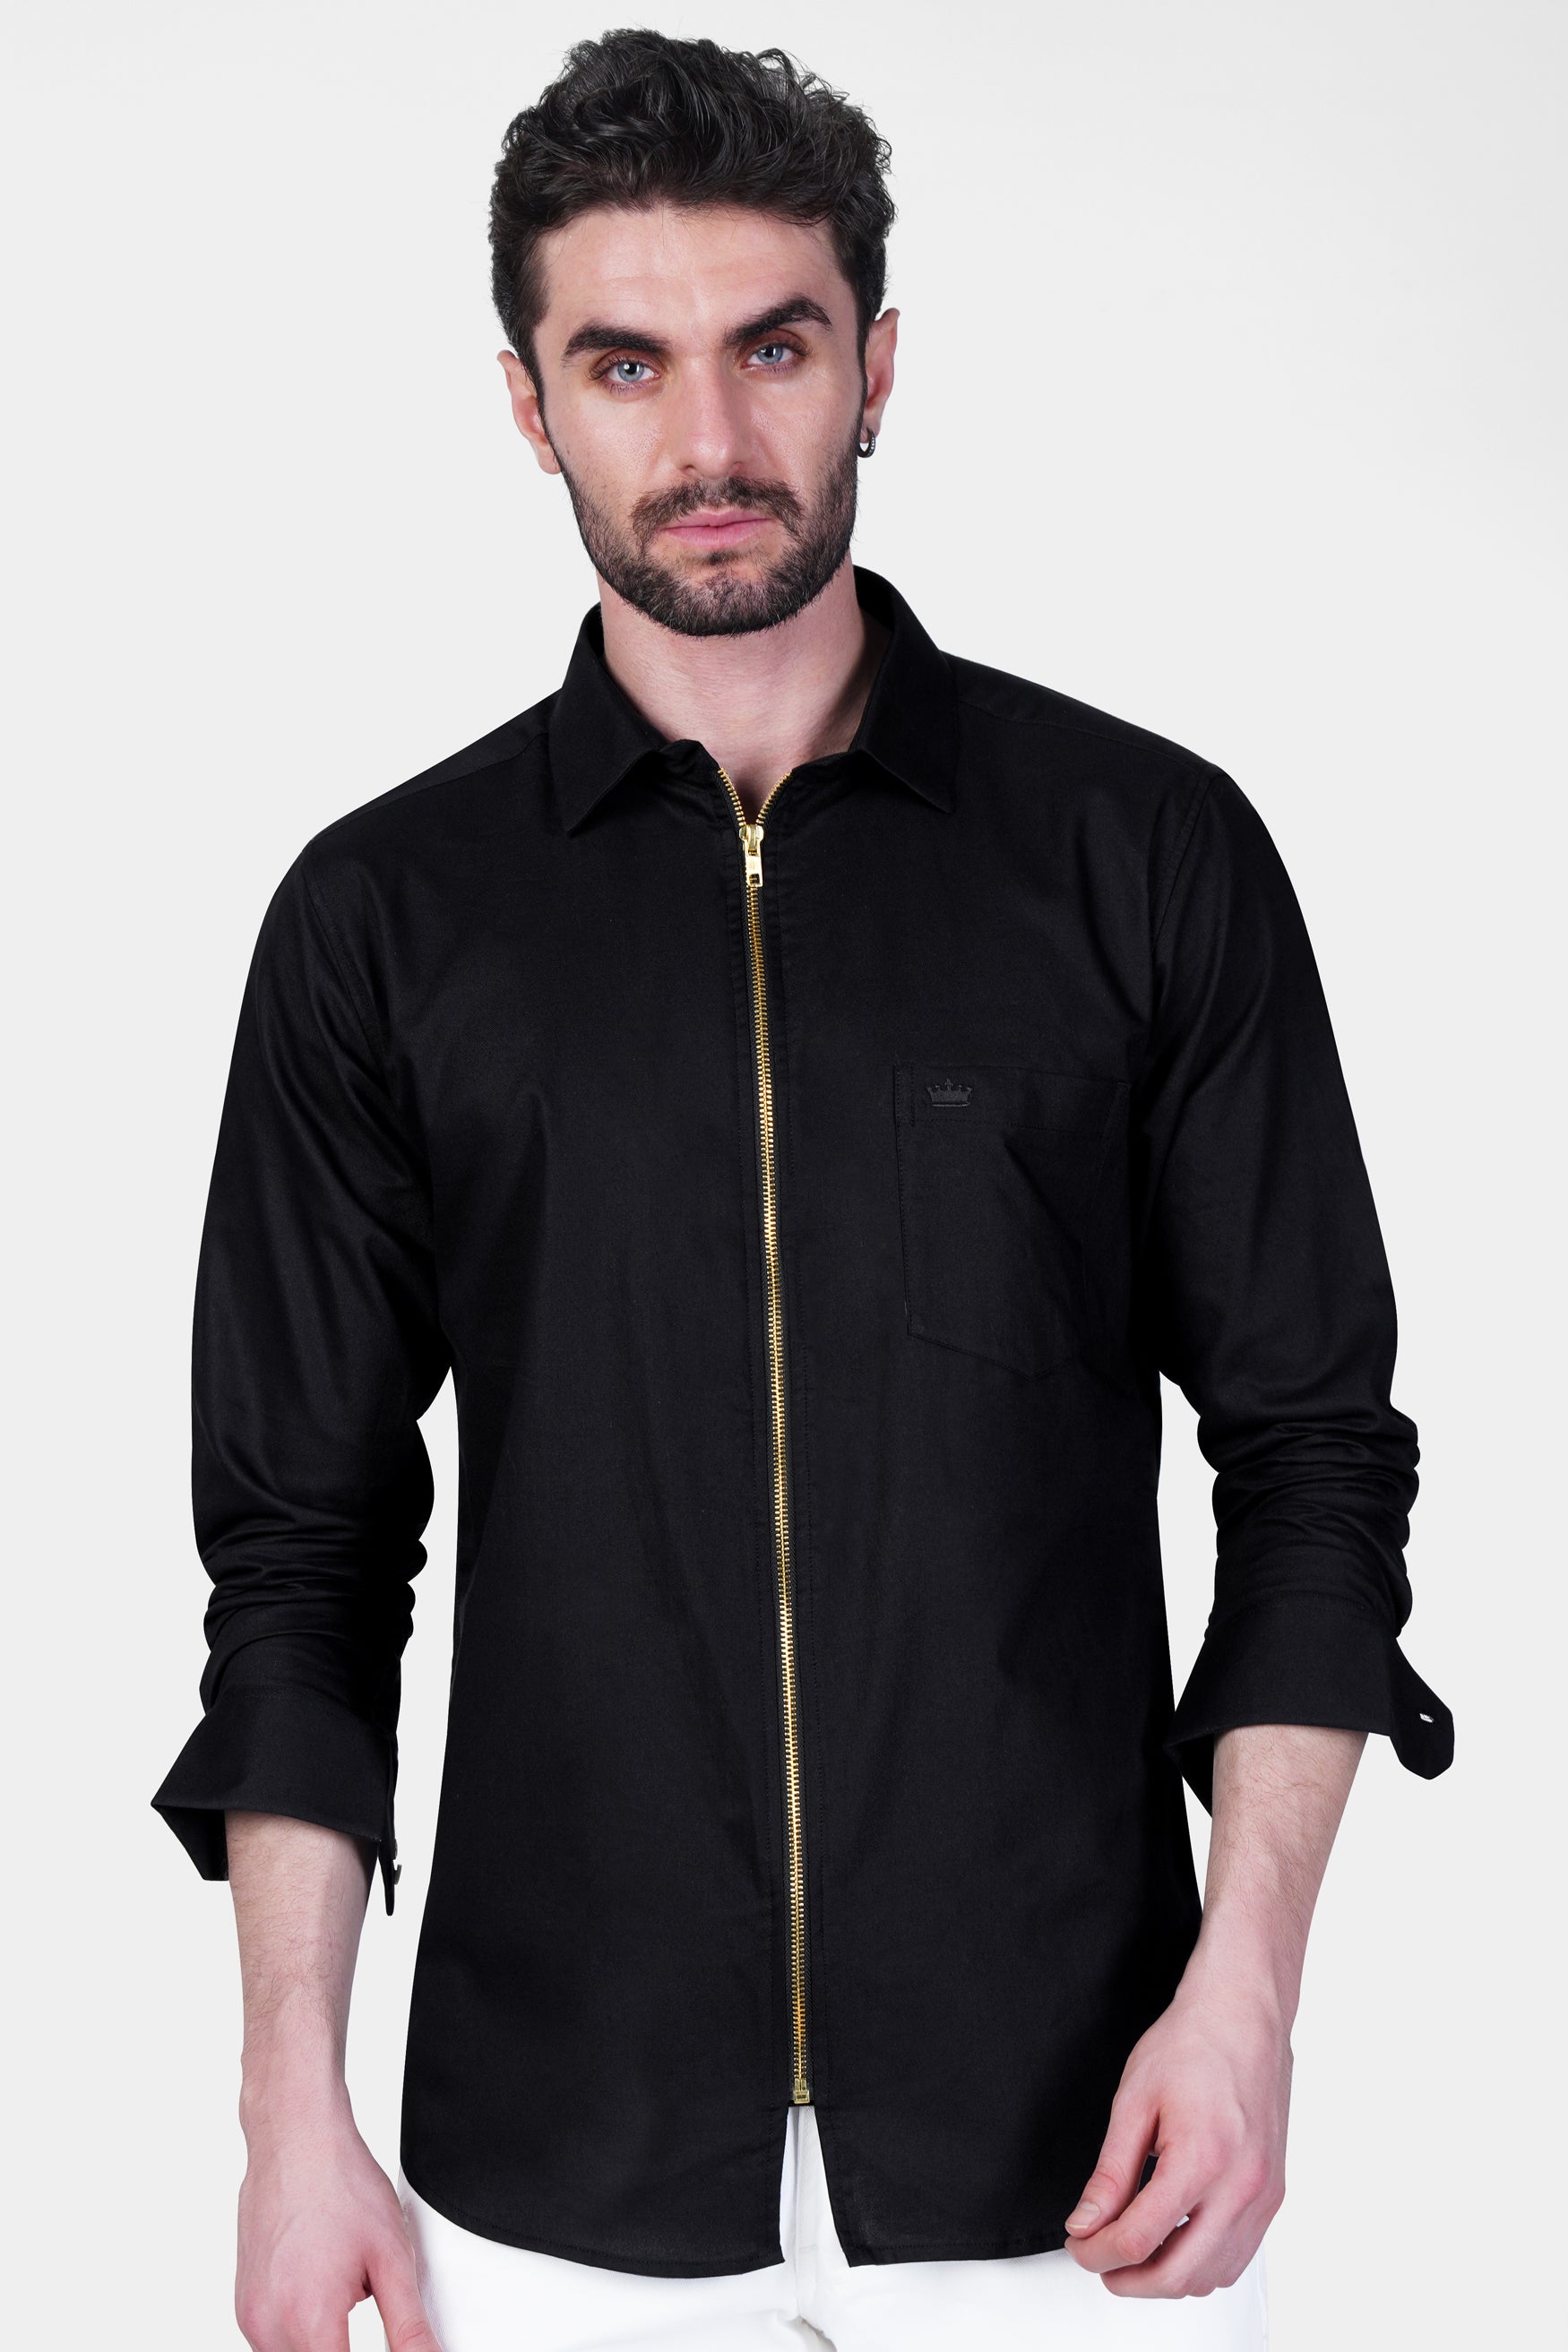 Jade Black Royal Oxford Designer Overshirt with Zipper Closure